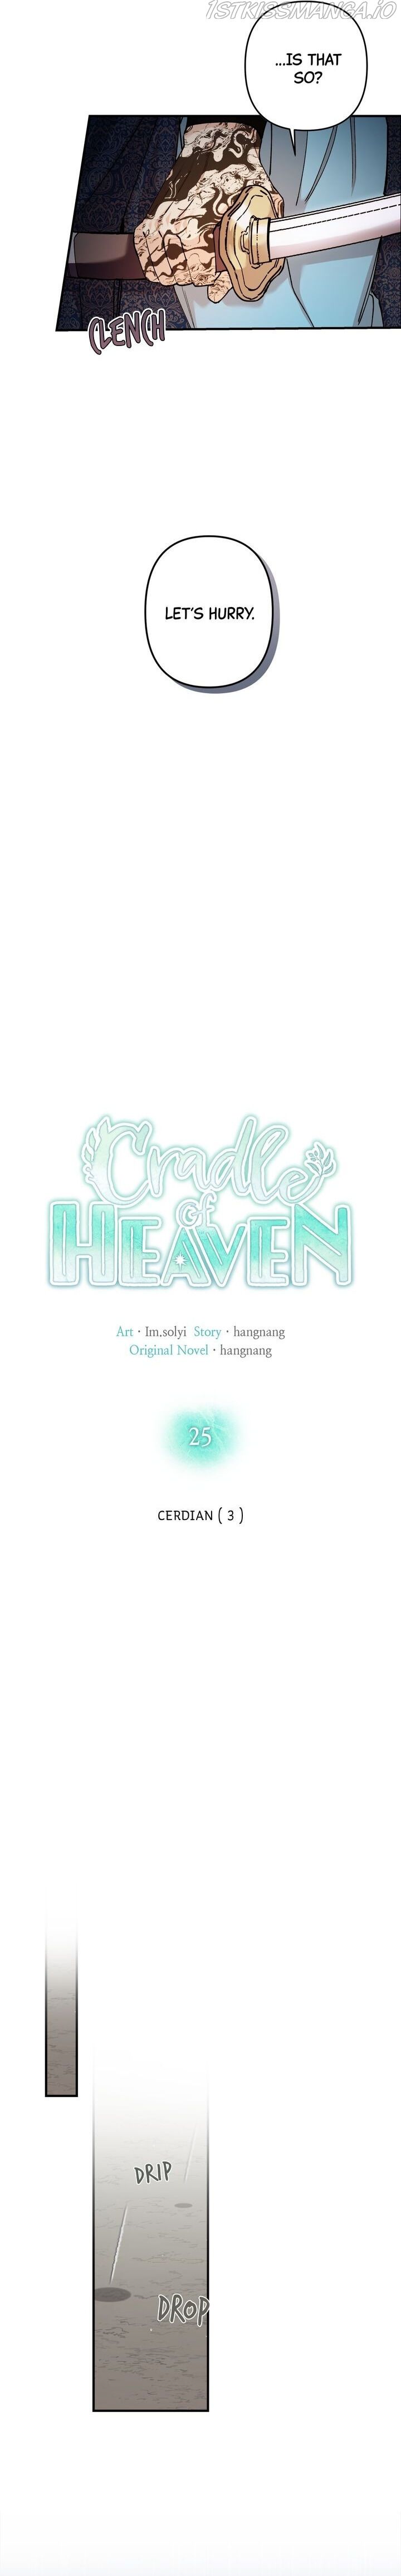 Cradle of Heaven chapter 25